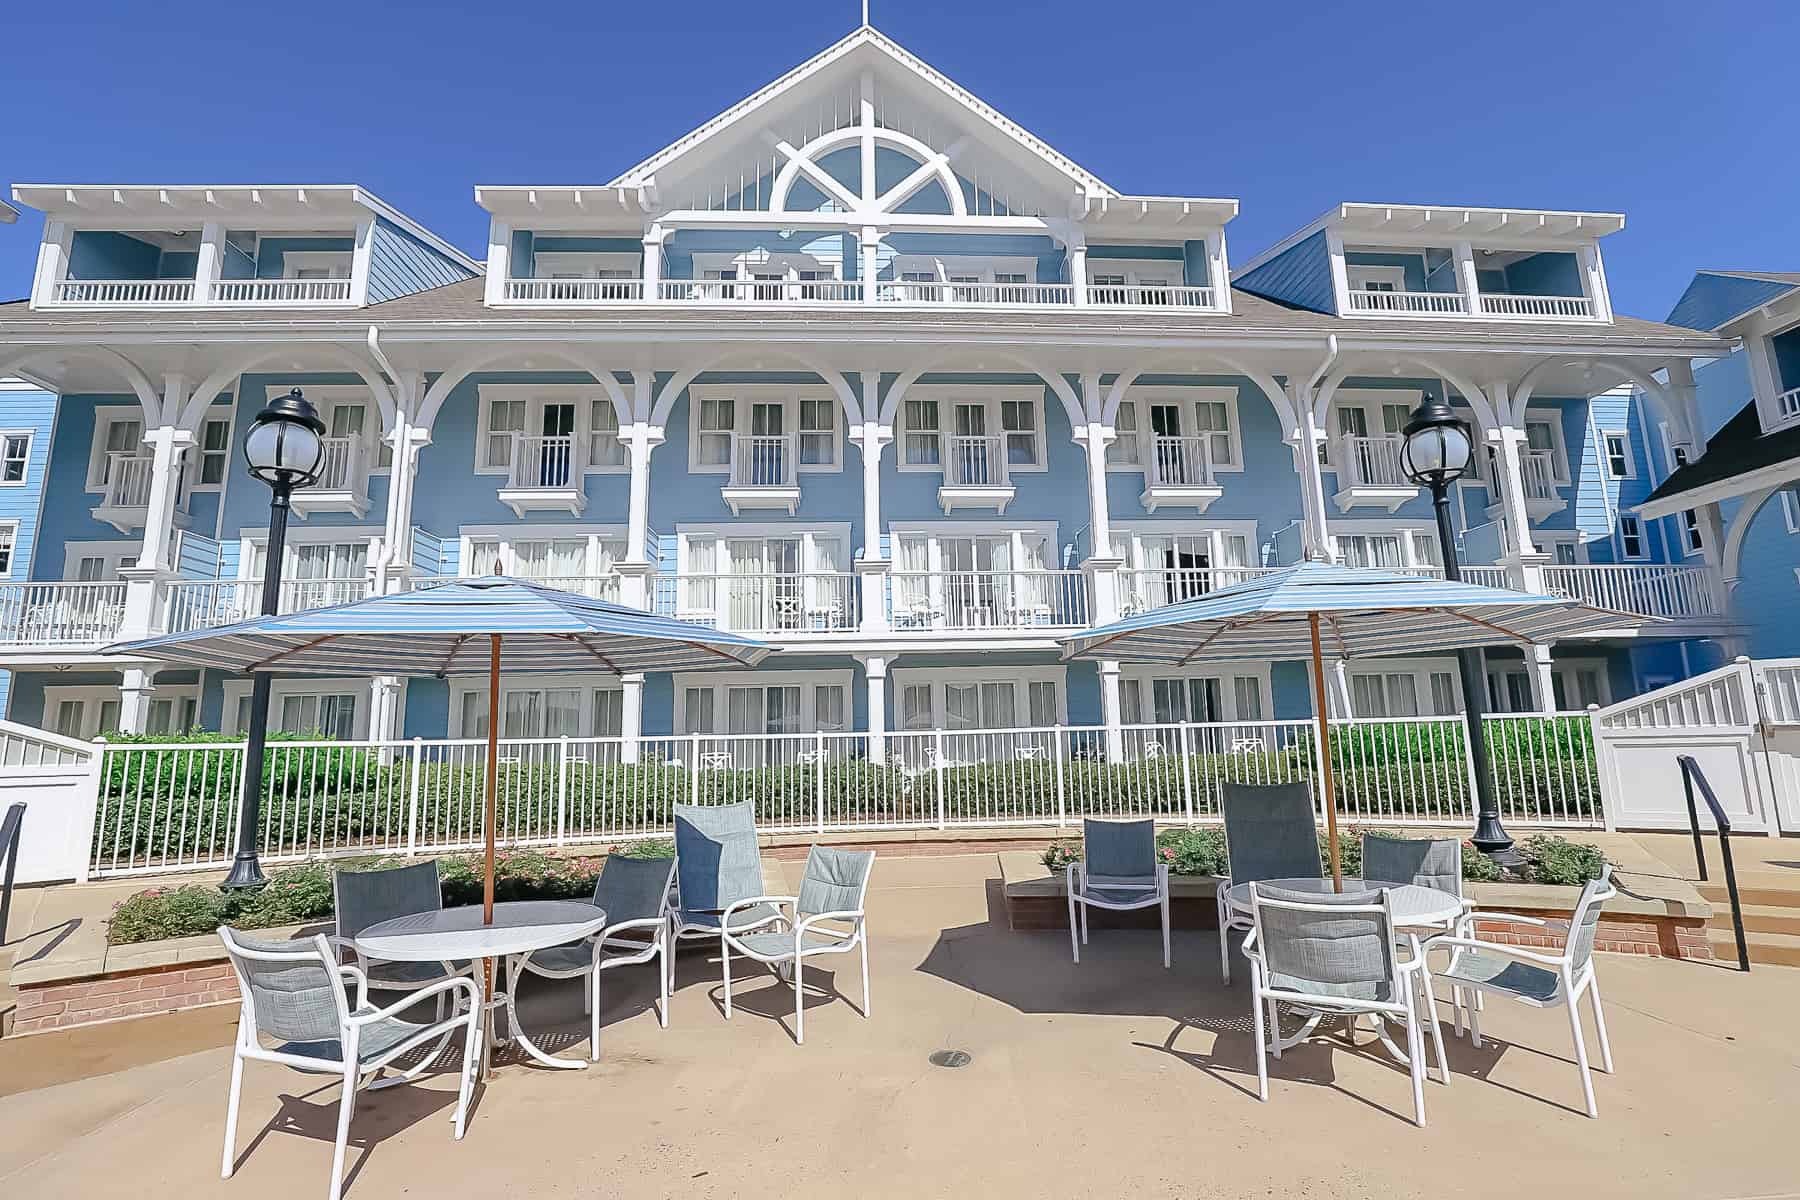 Disney Releases New Resort Video Series Starting with Disney’s Beach Club Resort